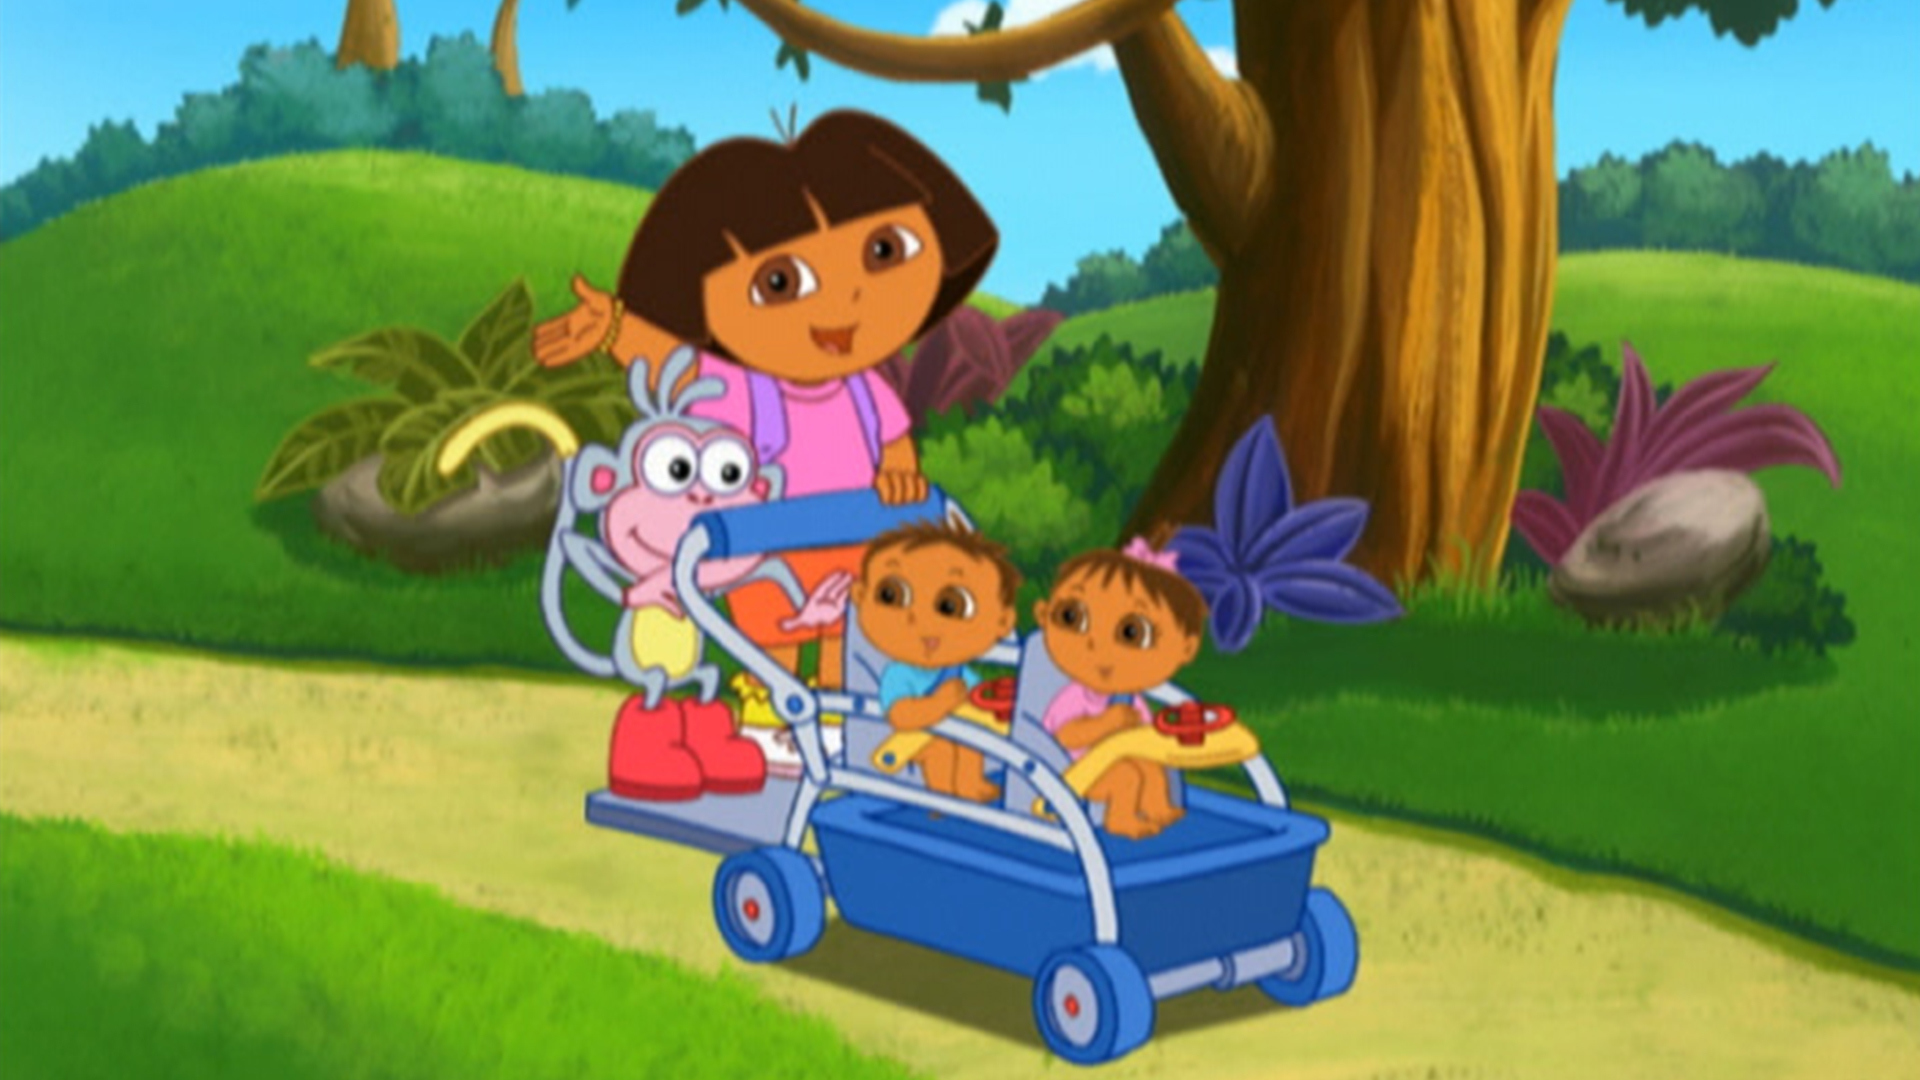 Dora the explorer season 1 episode 1 dailymotion